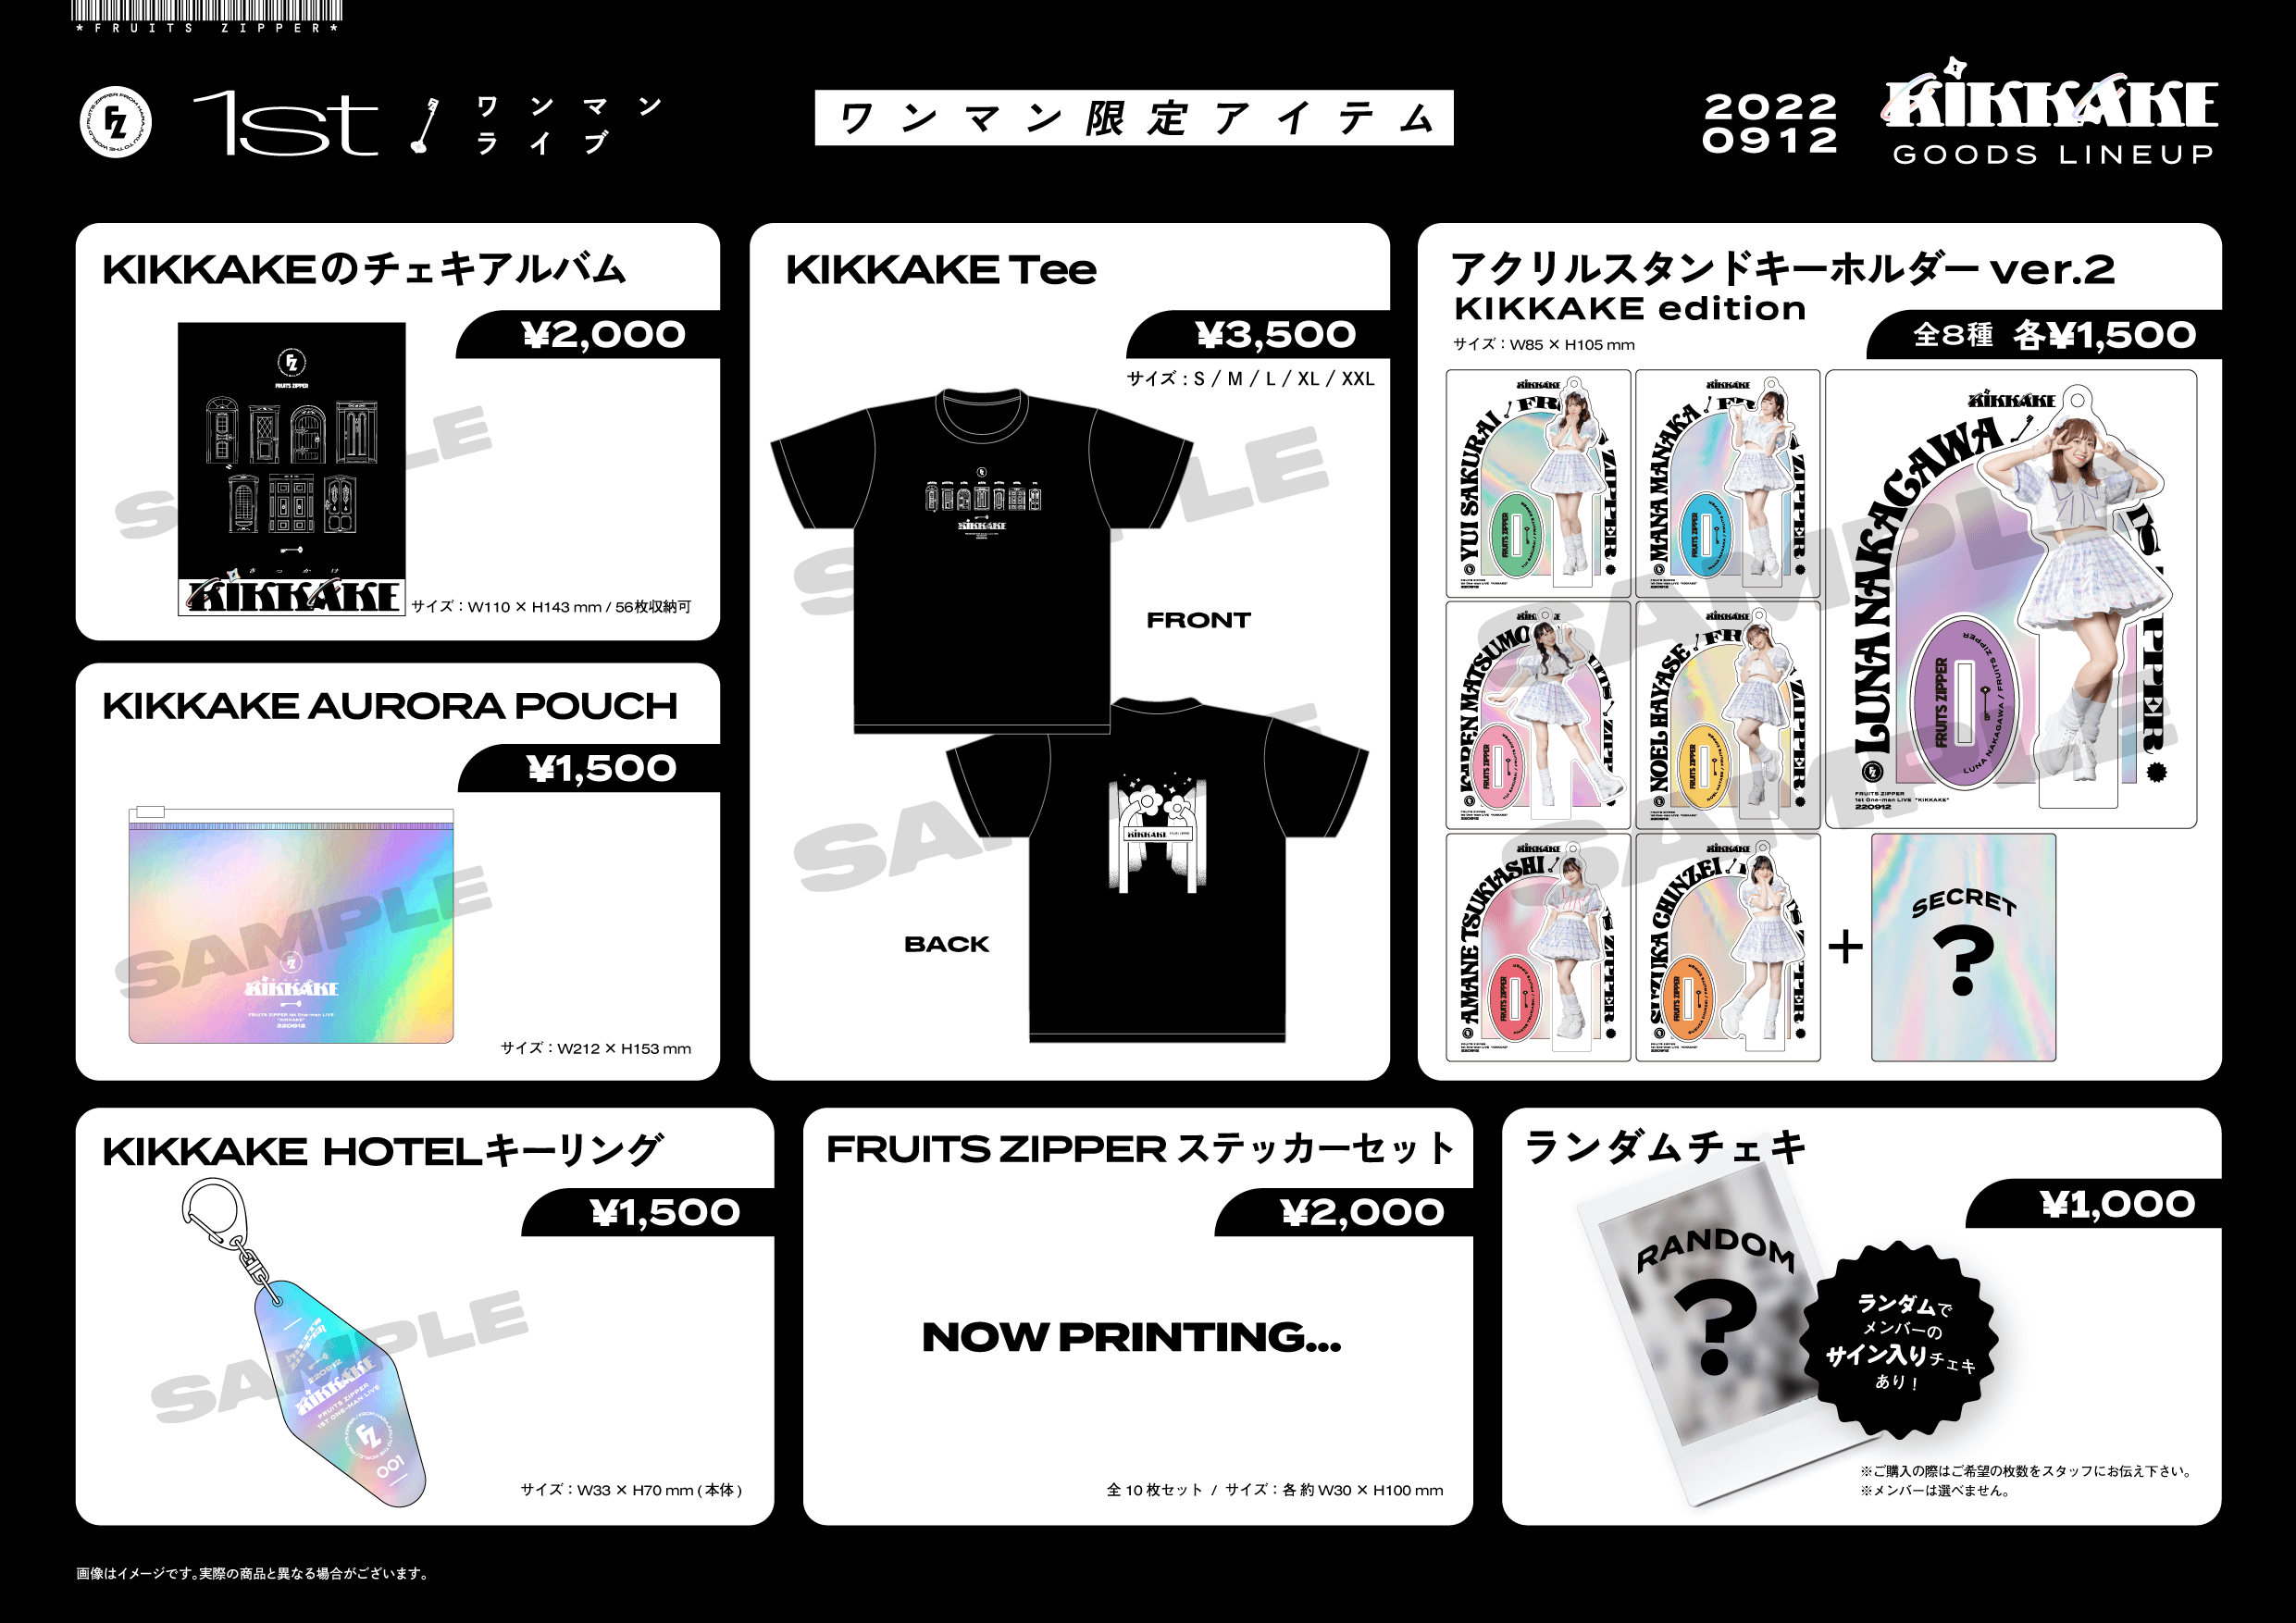 FRUITS ZIPPER 1st ワンマンライブ ~KIKKAKE~ MainVisual & Goods Design